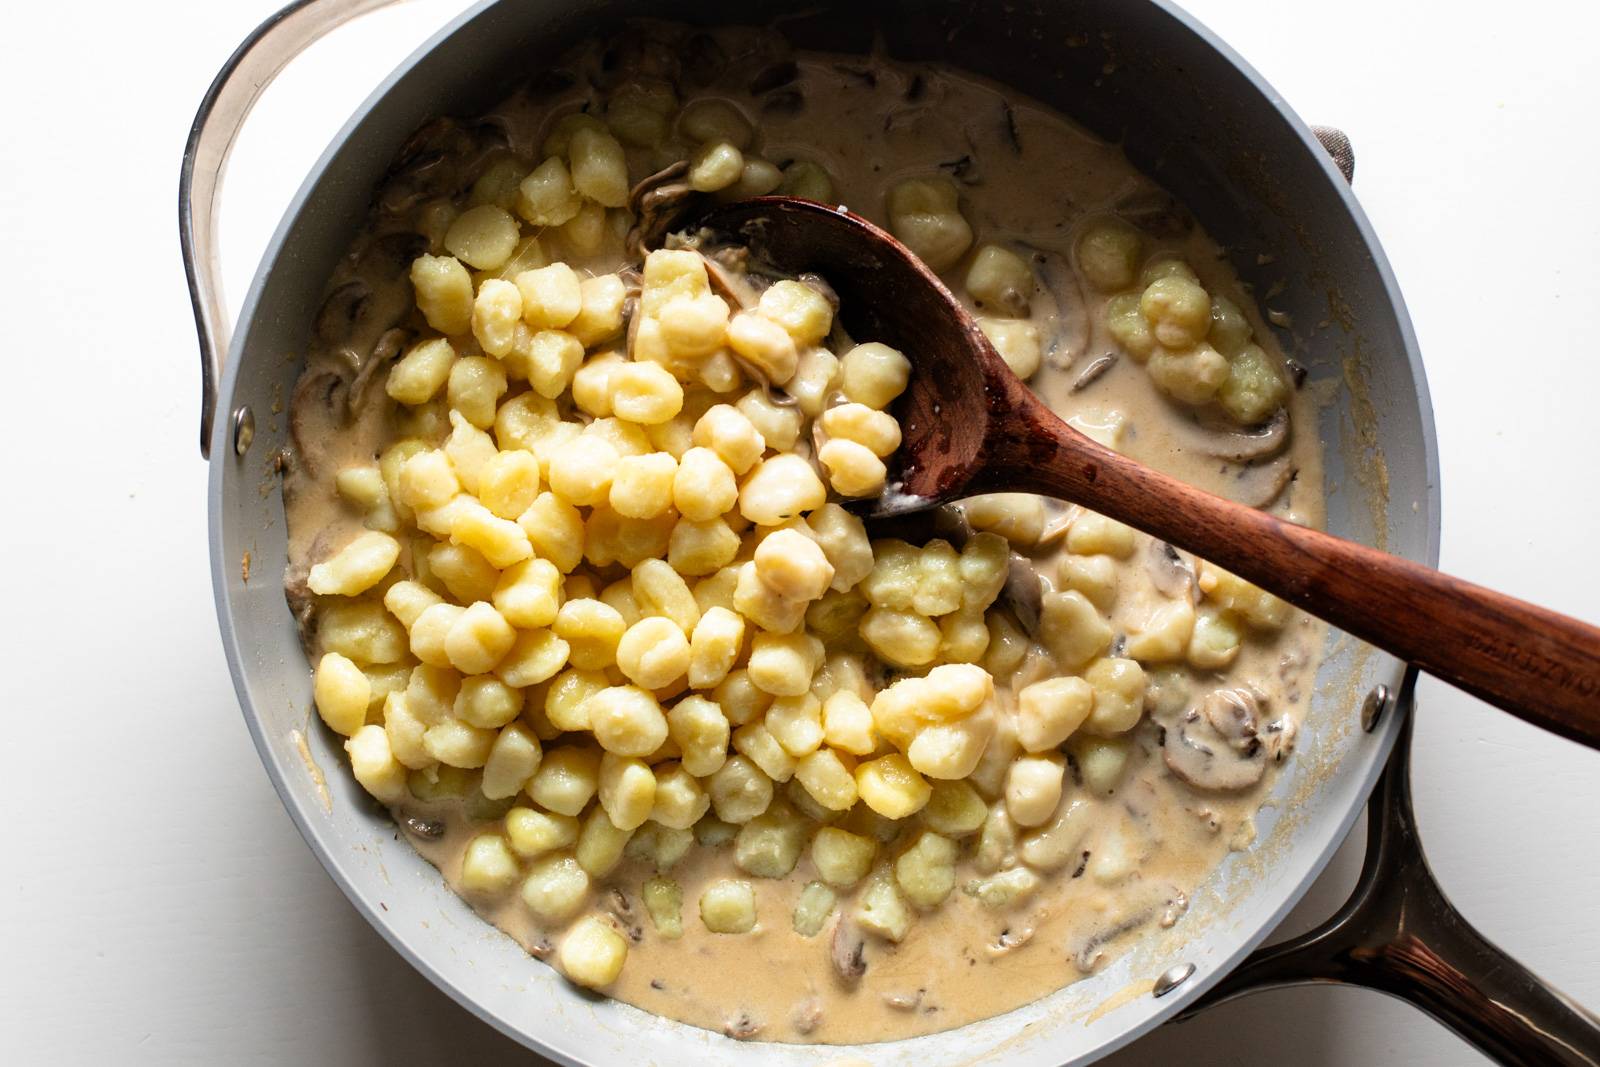 Stirring gnocchi into creamy mushroom sauce in a pan.